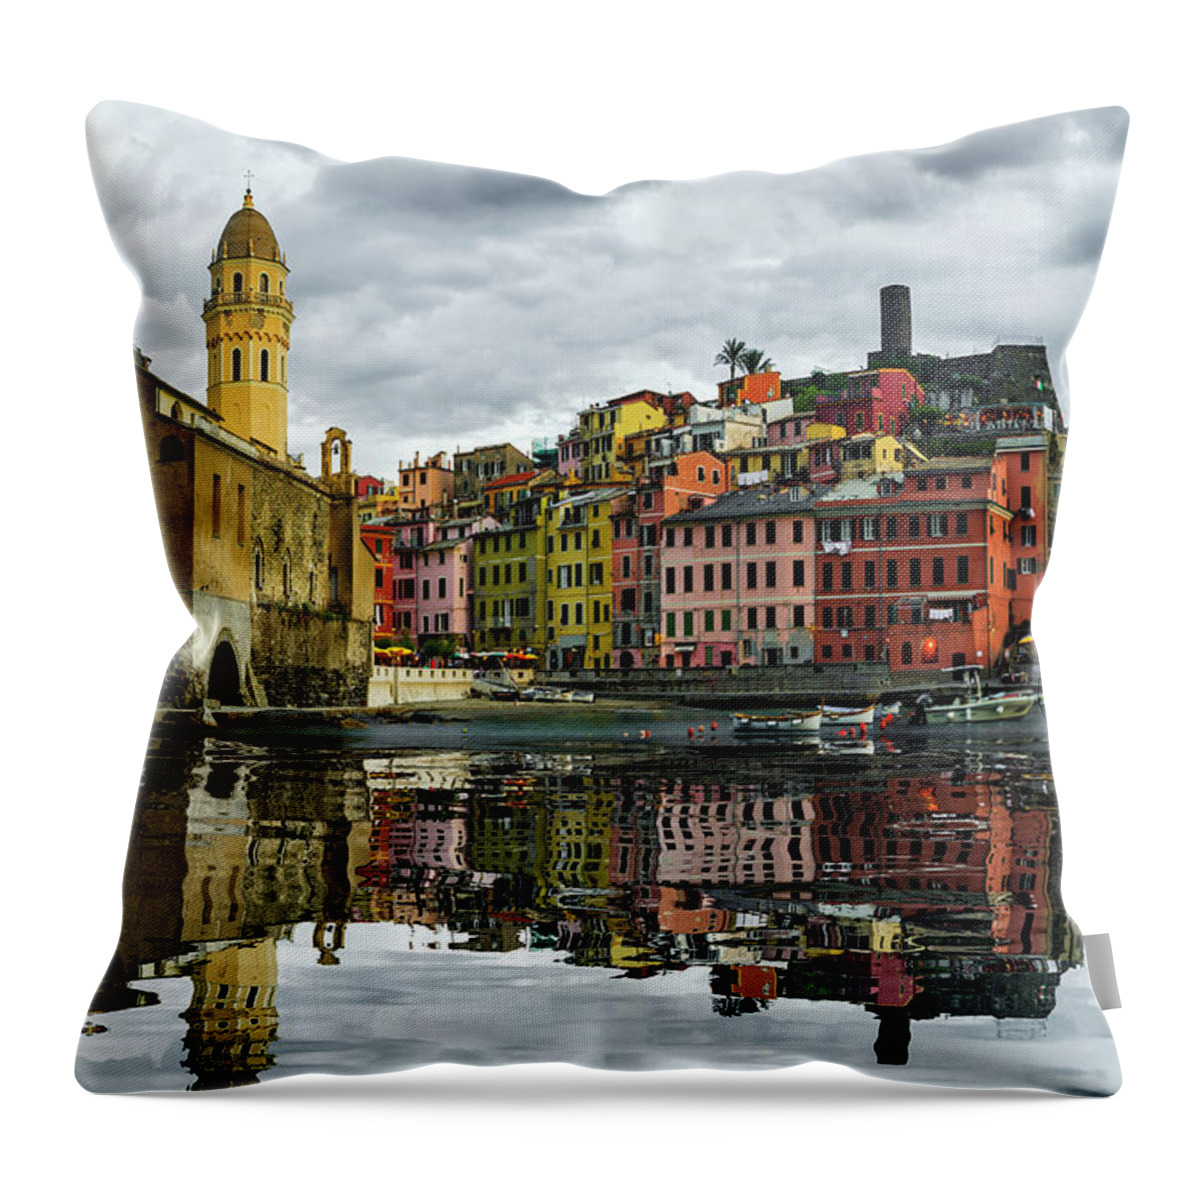 Gary Johnson Throw Pillow featuring the photograph Vernazza, Italy by Gary Johnson